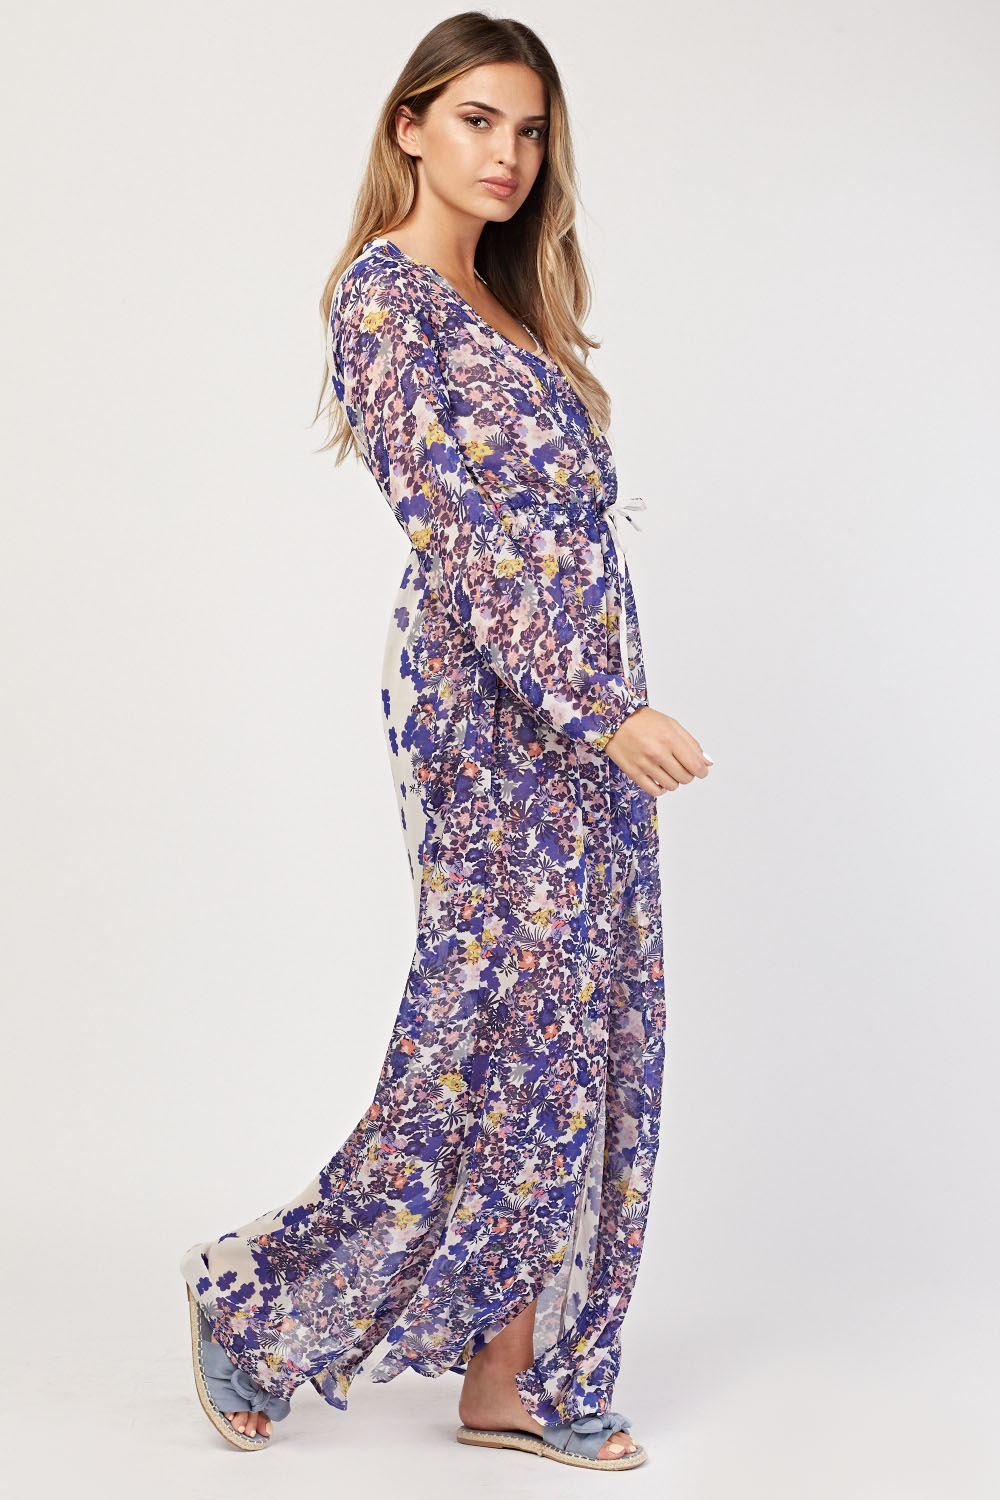 Sheer Floral Printed Maxi Dress - Just $7